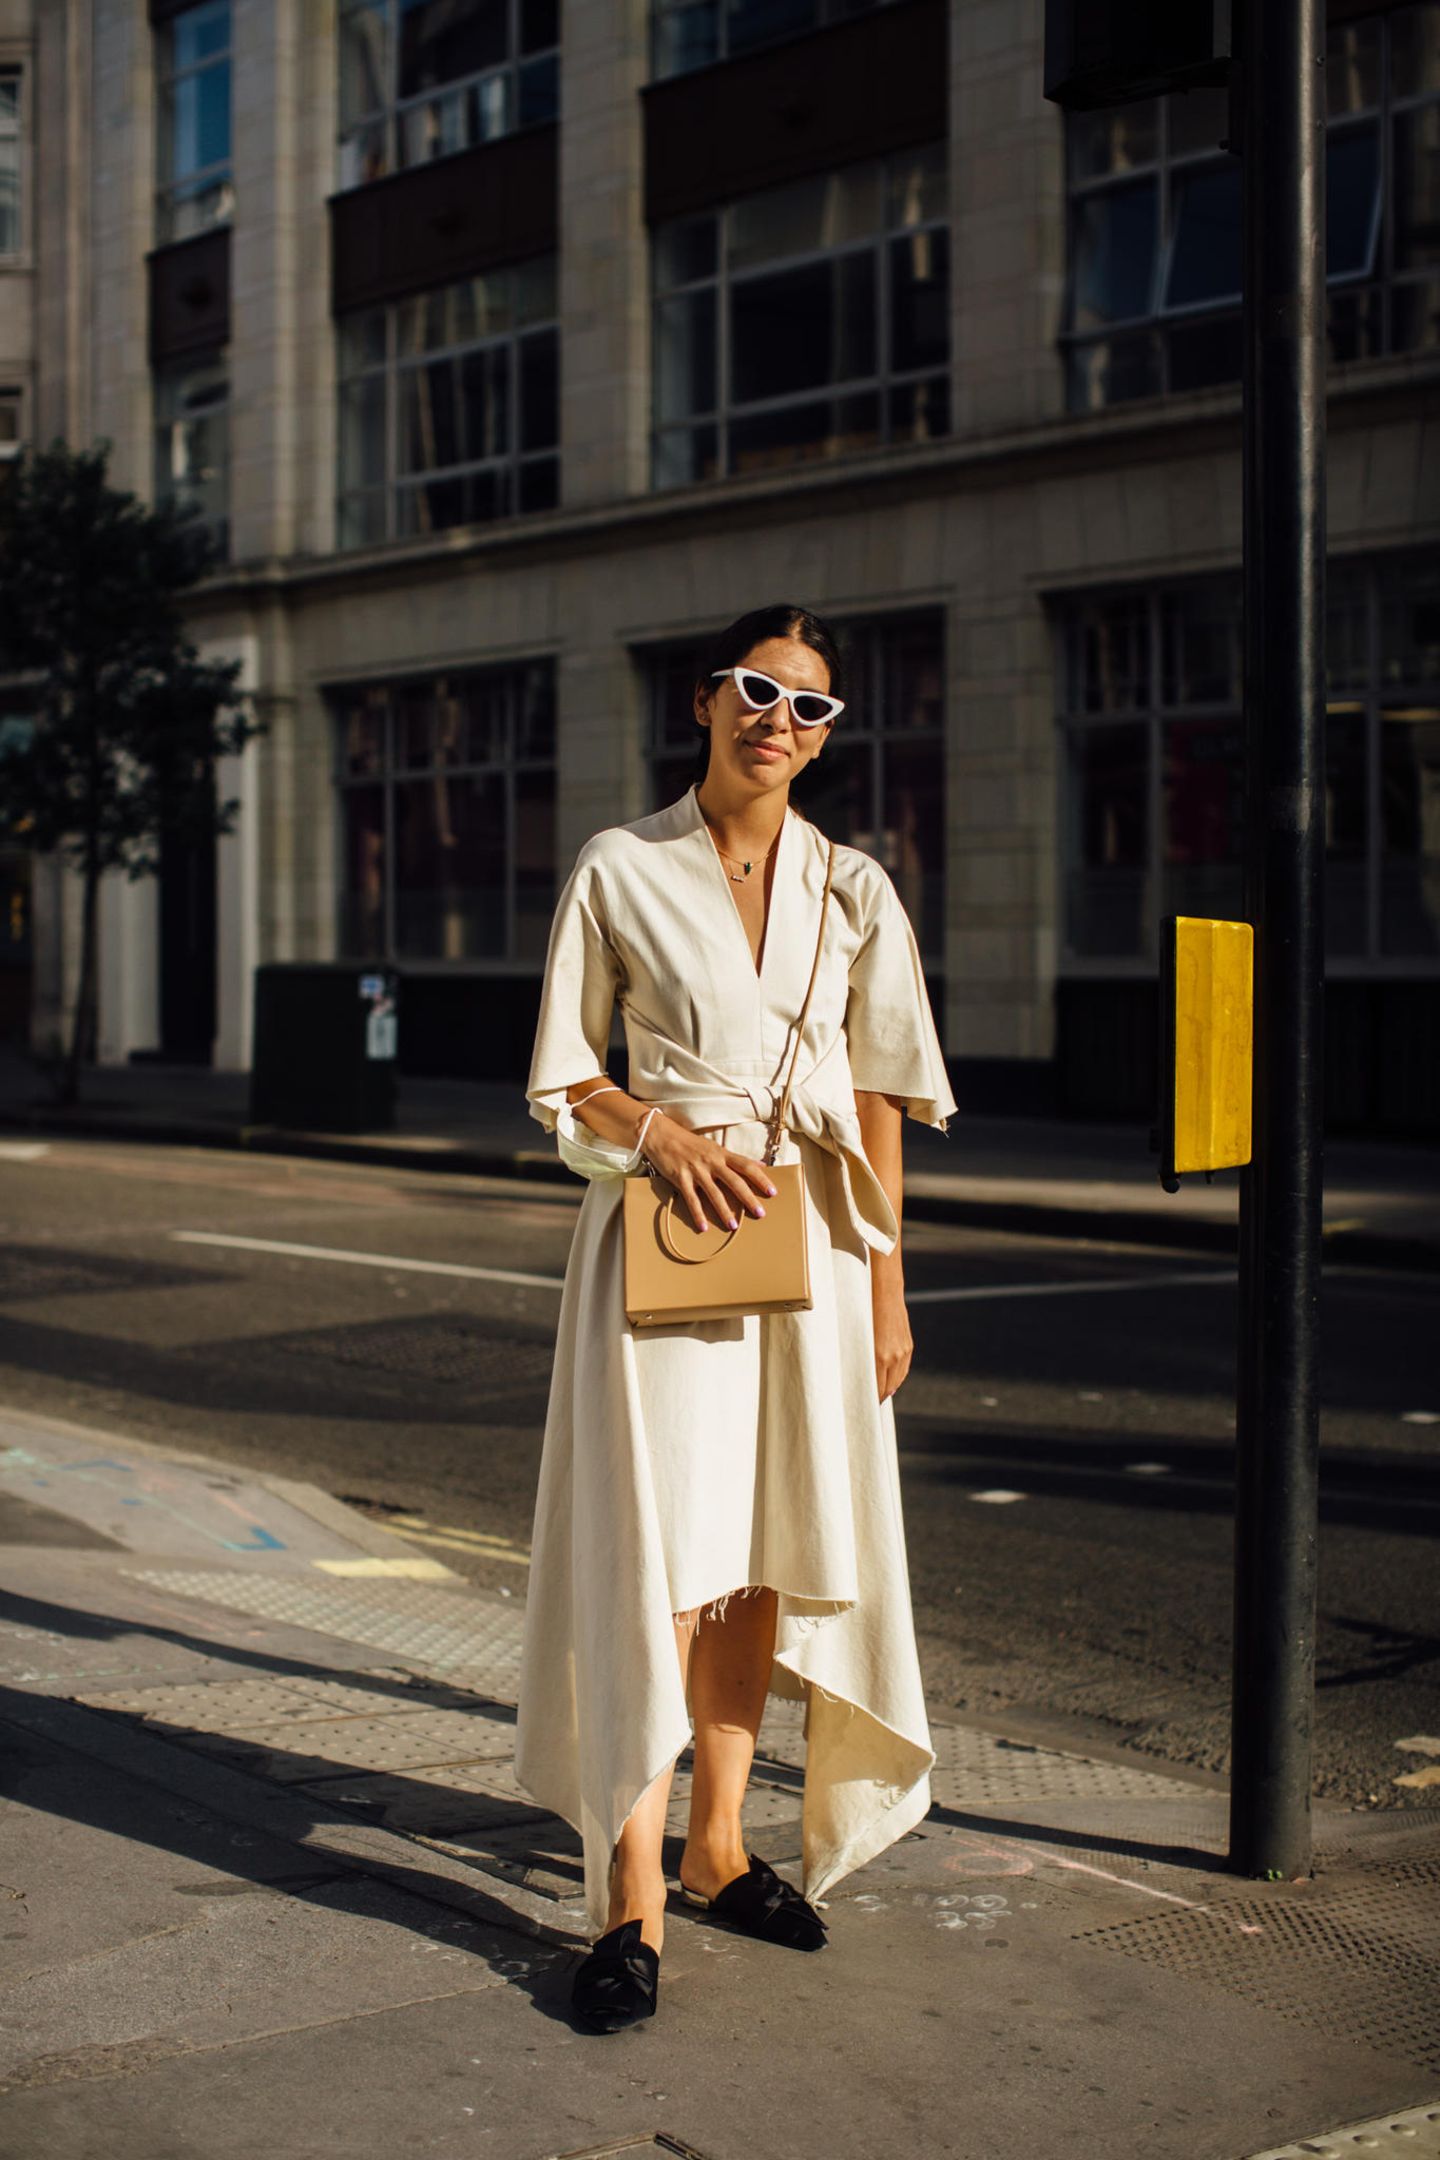 Street style fashion week: wide white dress "loading =" lazy